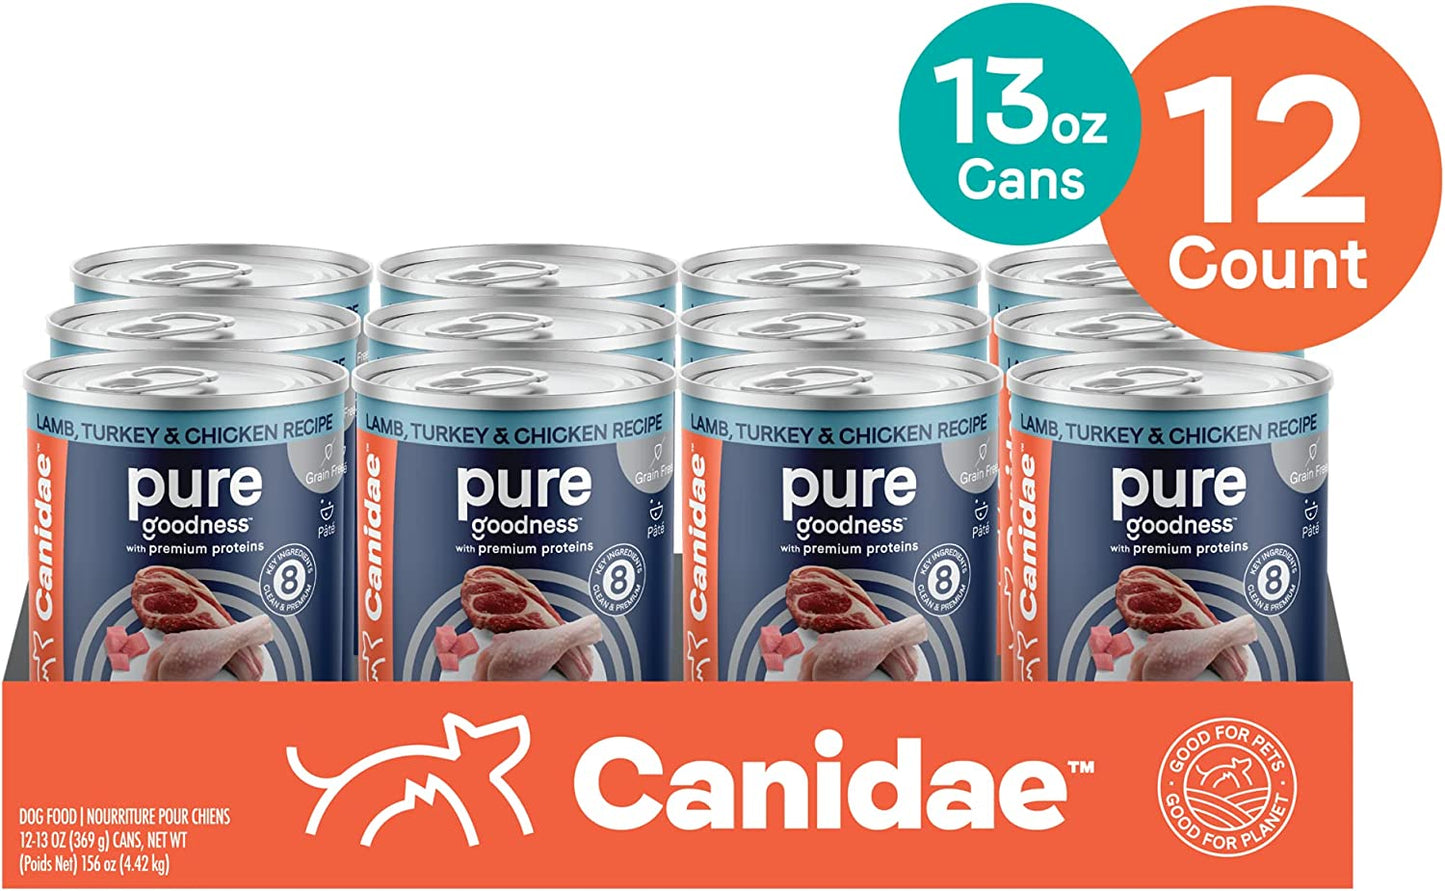 Canidae Pure Lamb, Turkey & Chicken Recipe 13-oz, Wet Dog Food, Case Of 12